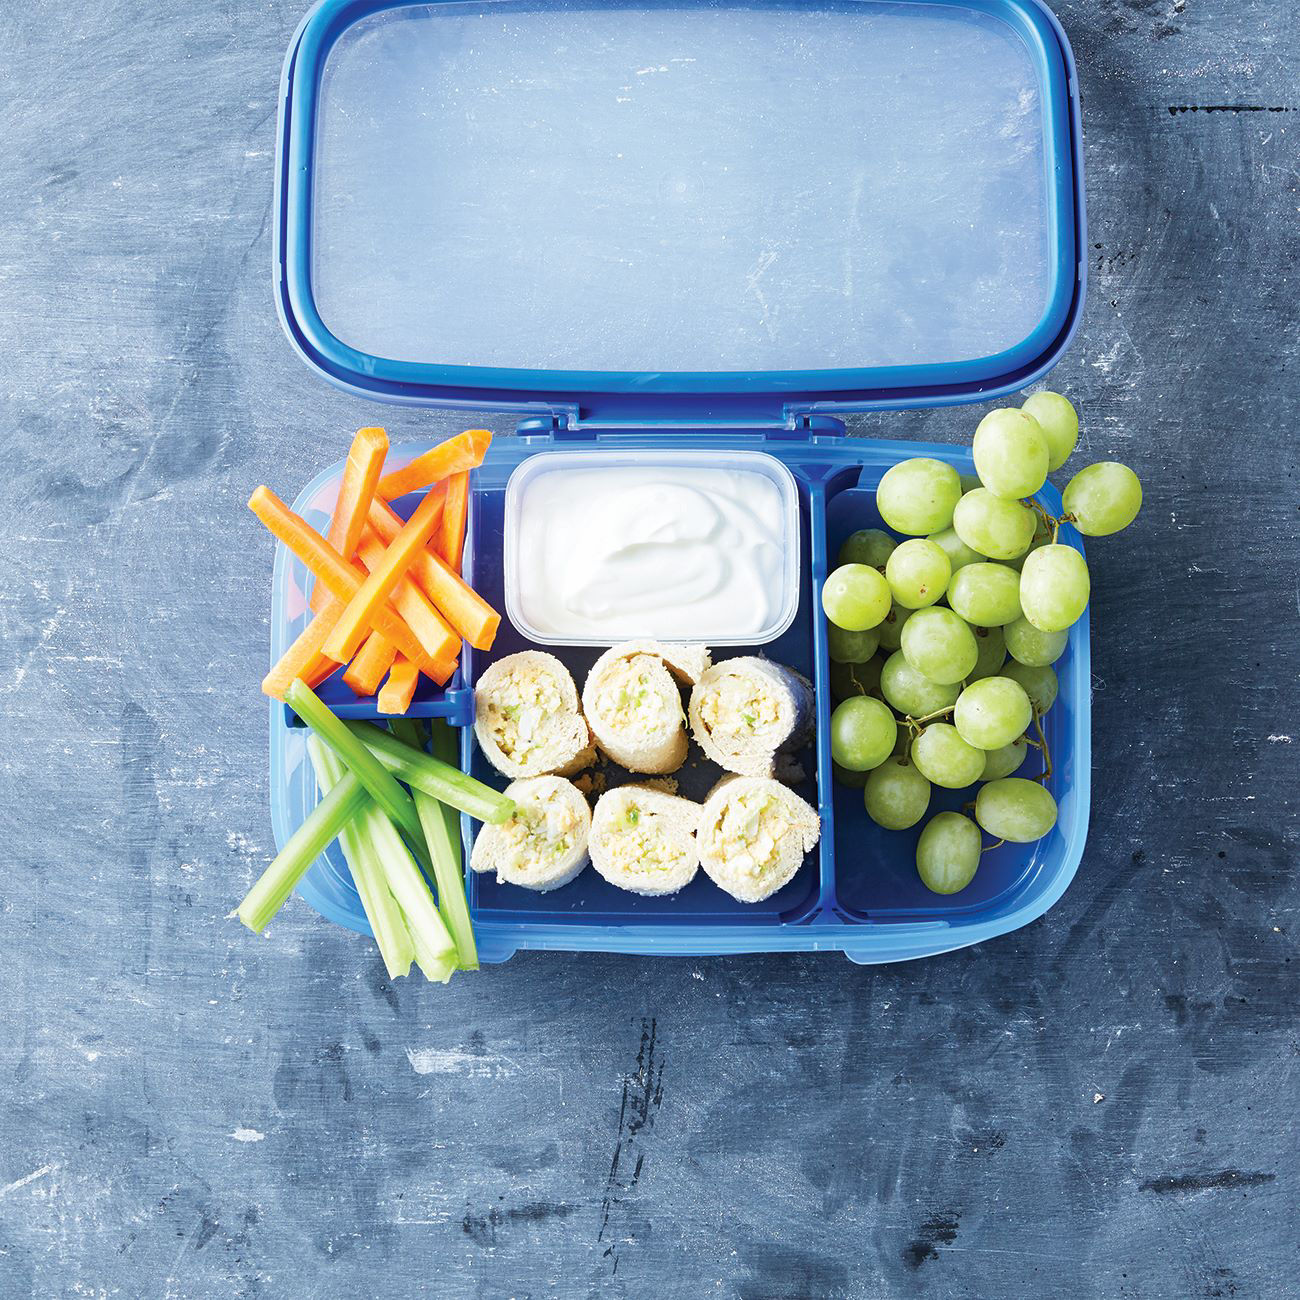 Lettuce Roll Lunch Box